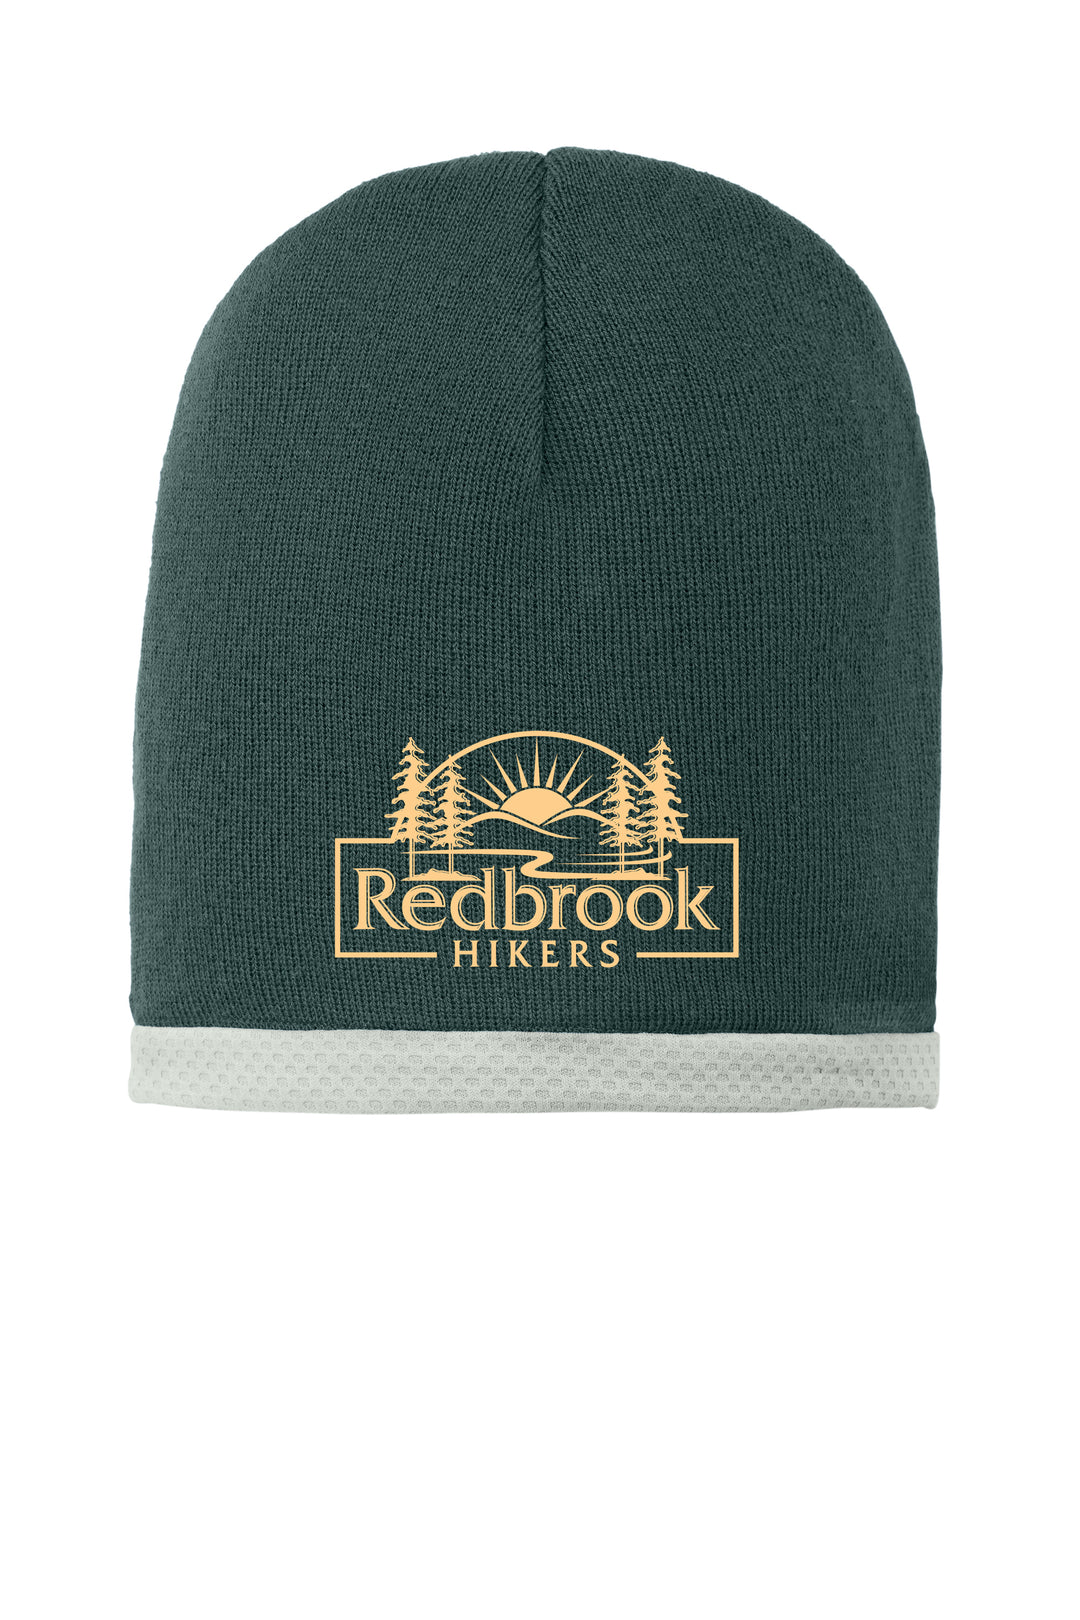 Redbrook Hikers- Sport-Tek® Performance Knit Cap (STC15)